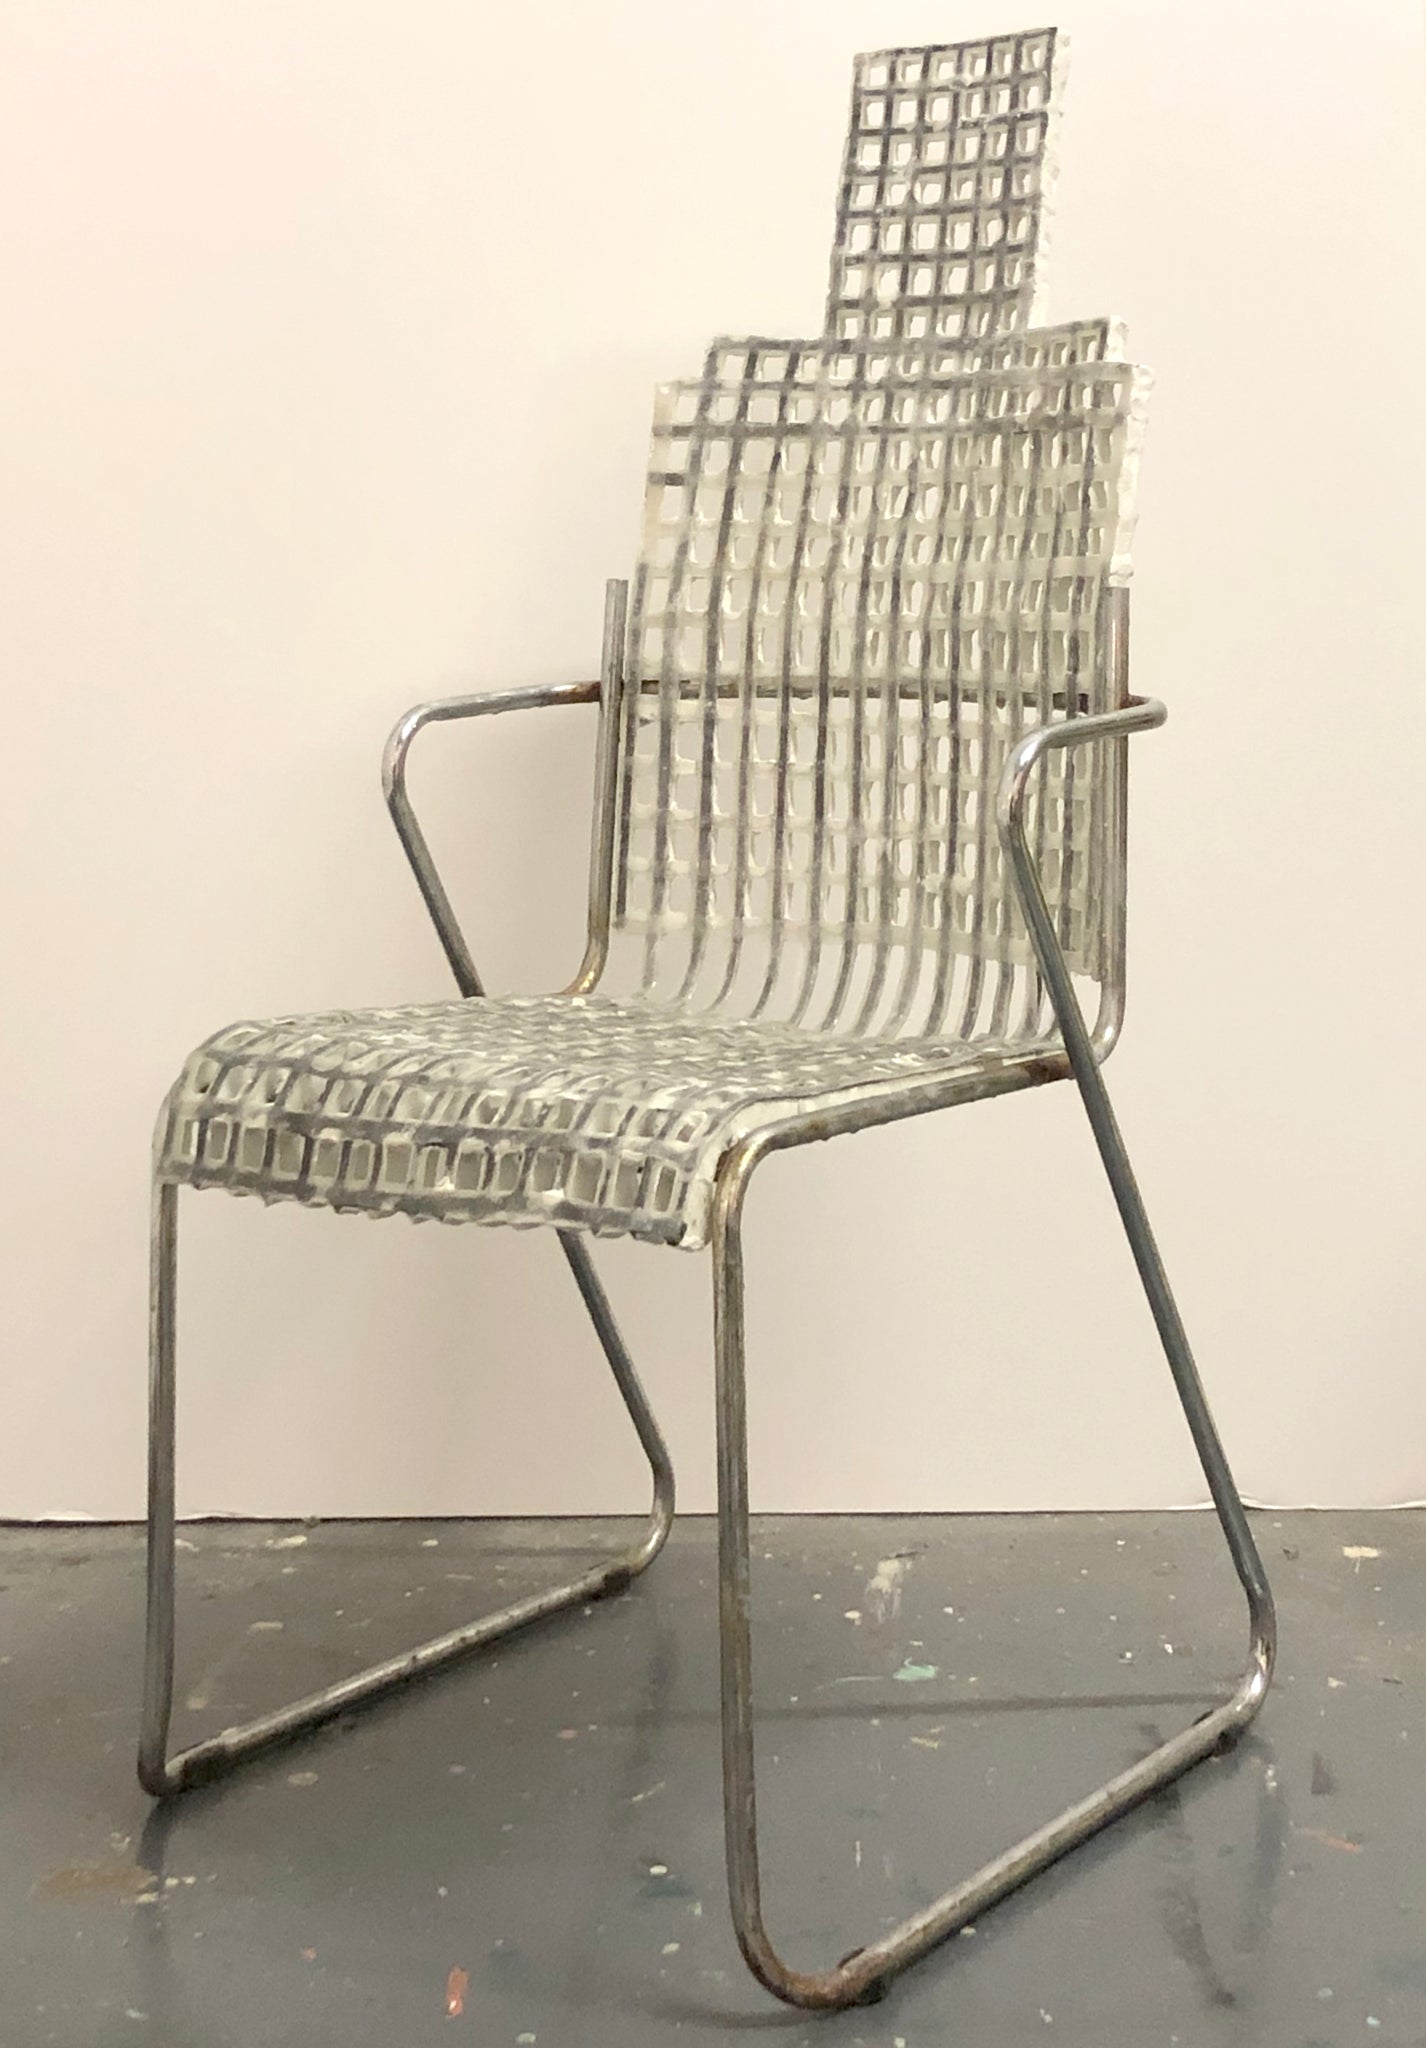 Corey Escoto, "Grid Chair"